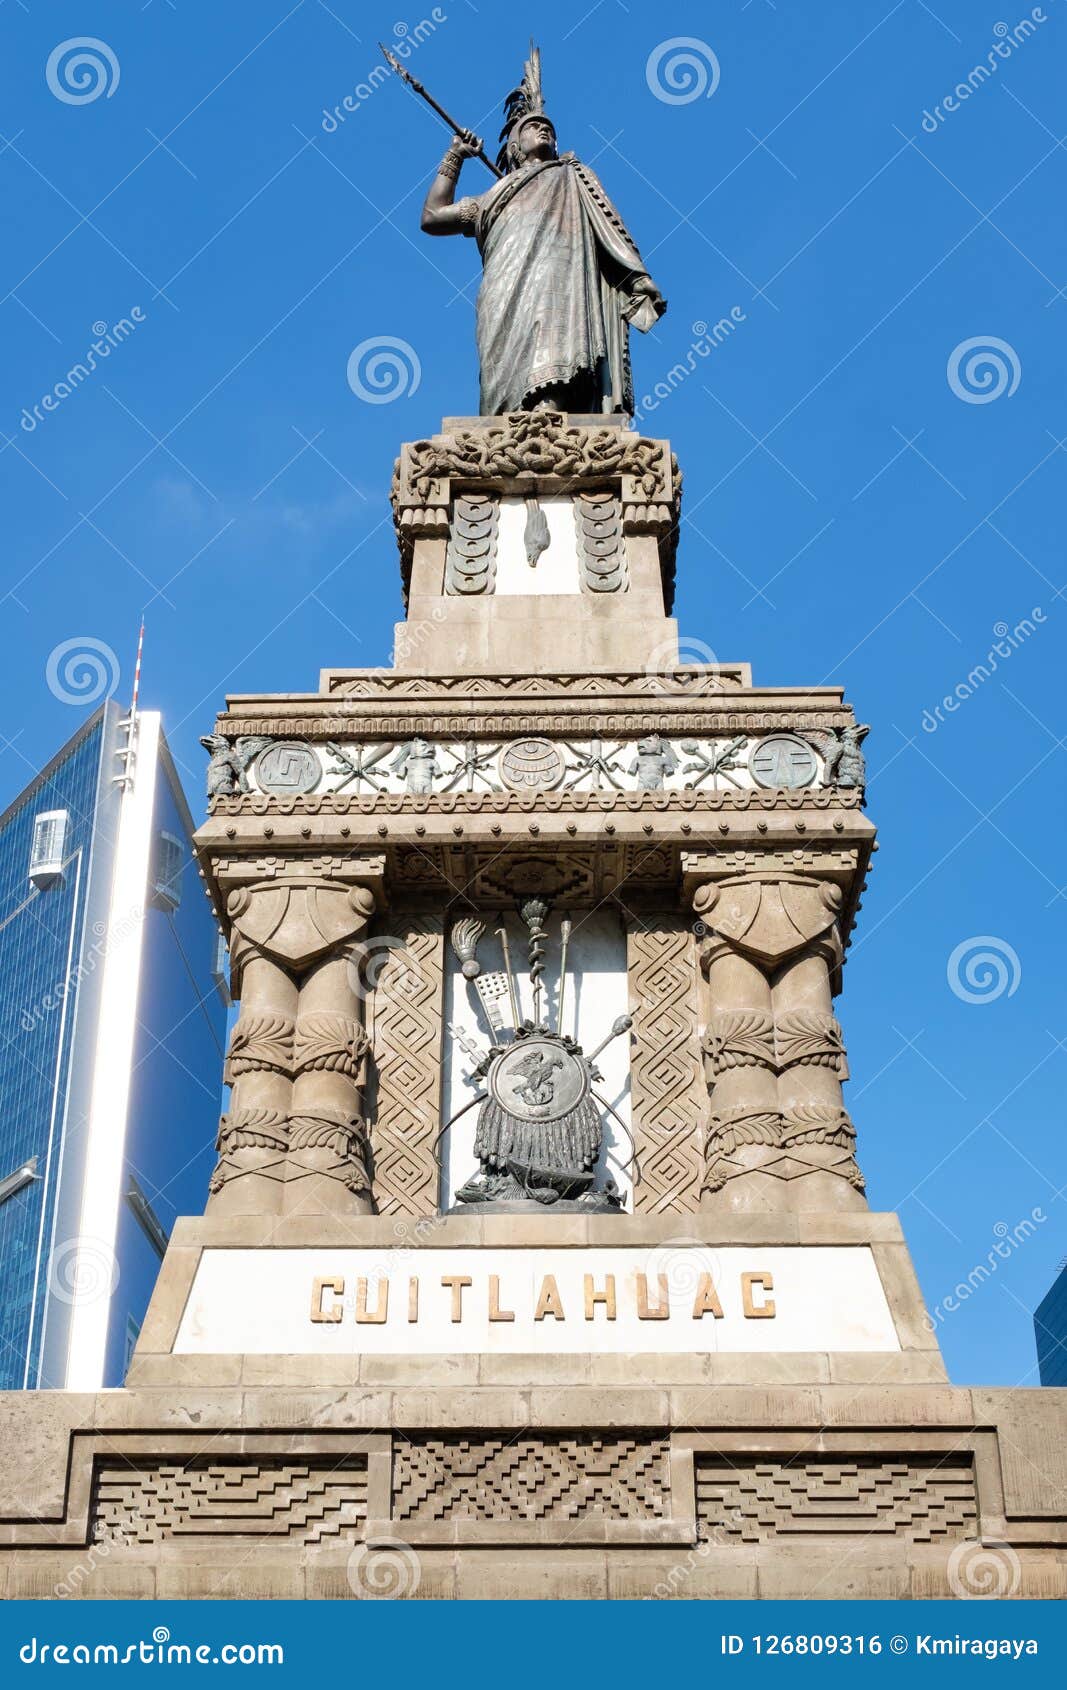 the monument to cuauhtemoc at paseo de la reforma in mexico city